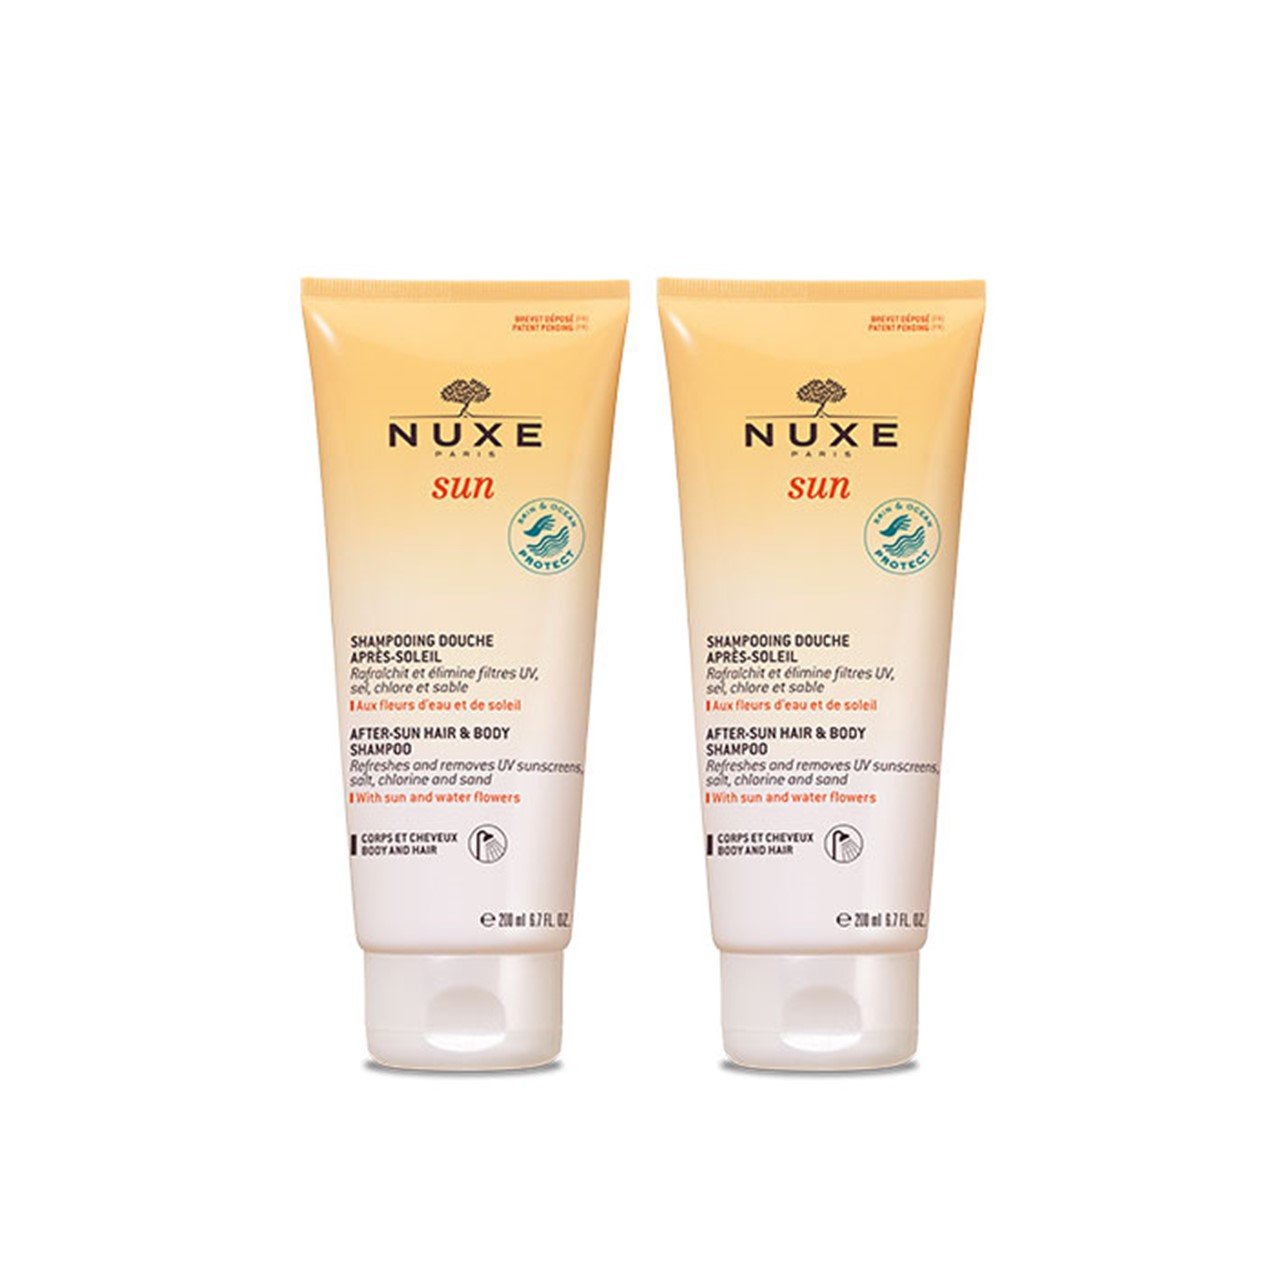 NUXE Sun After-Sun Hair and Body Shampoo 200ml x2